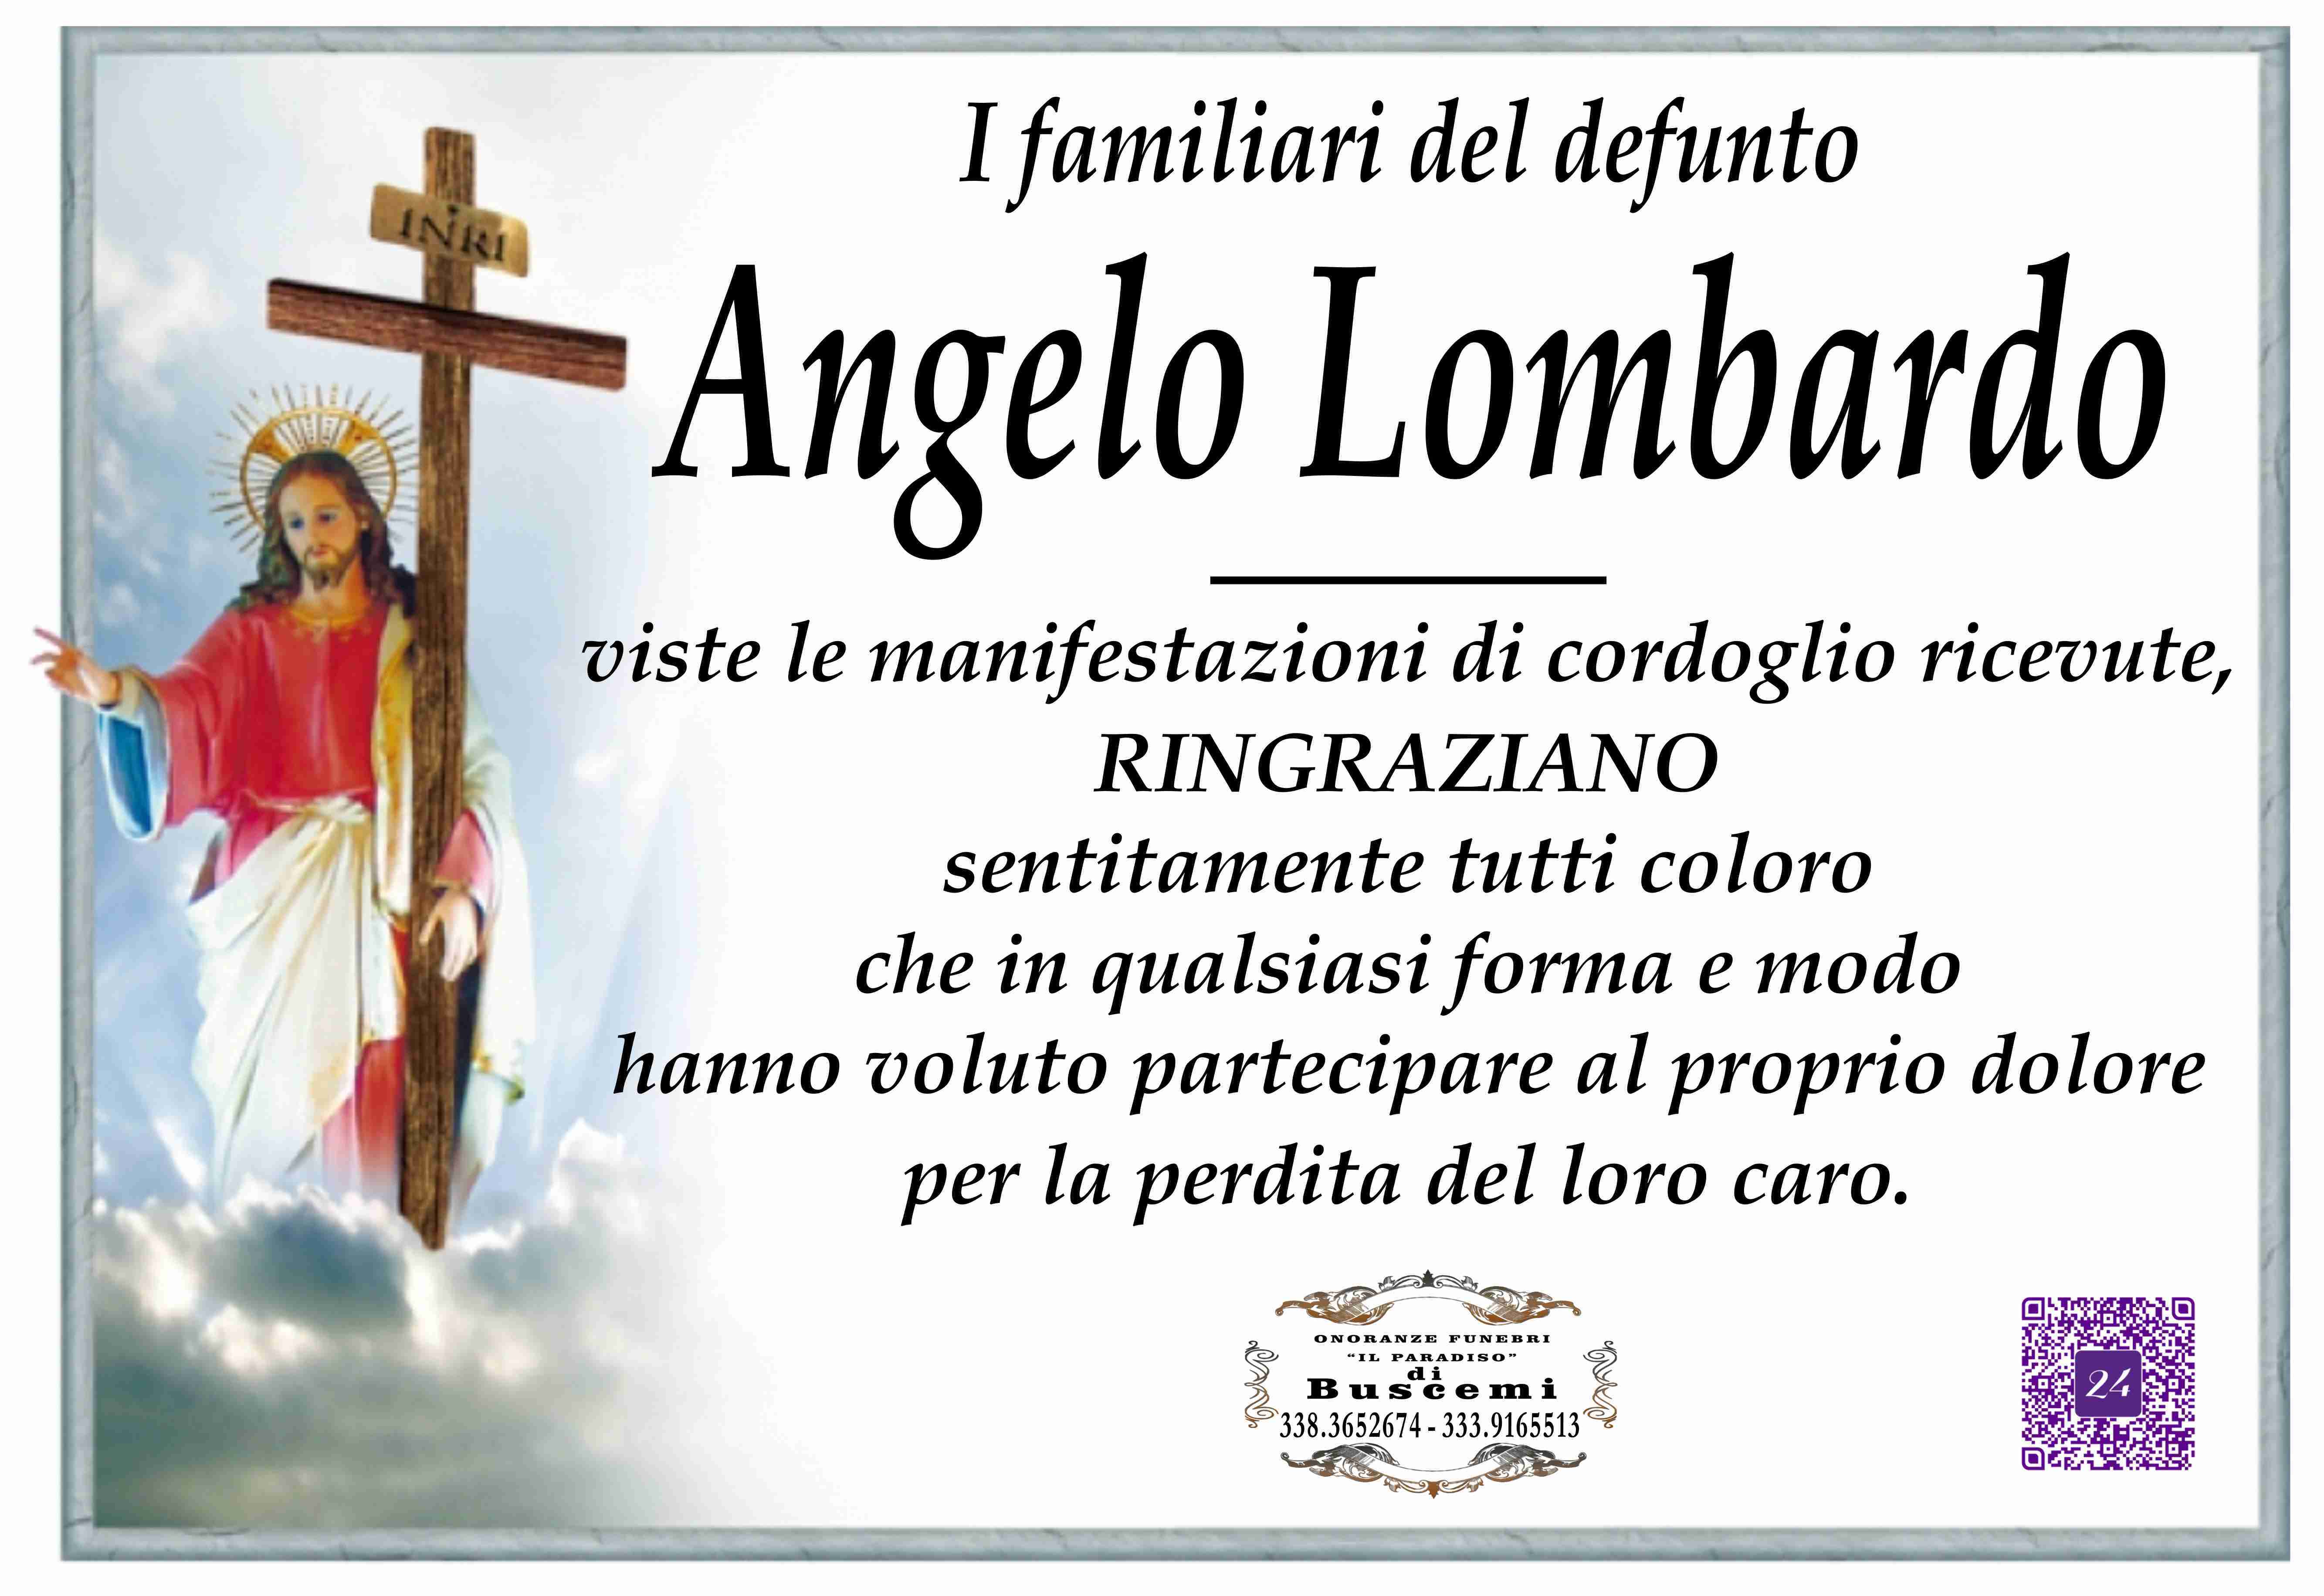 Angelo Lombardo